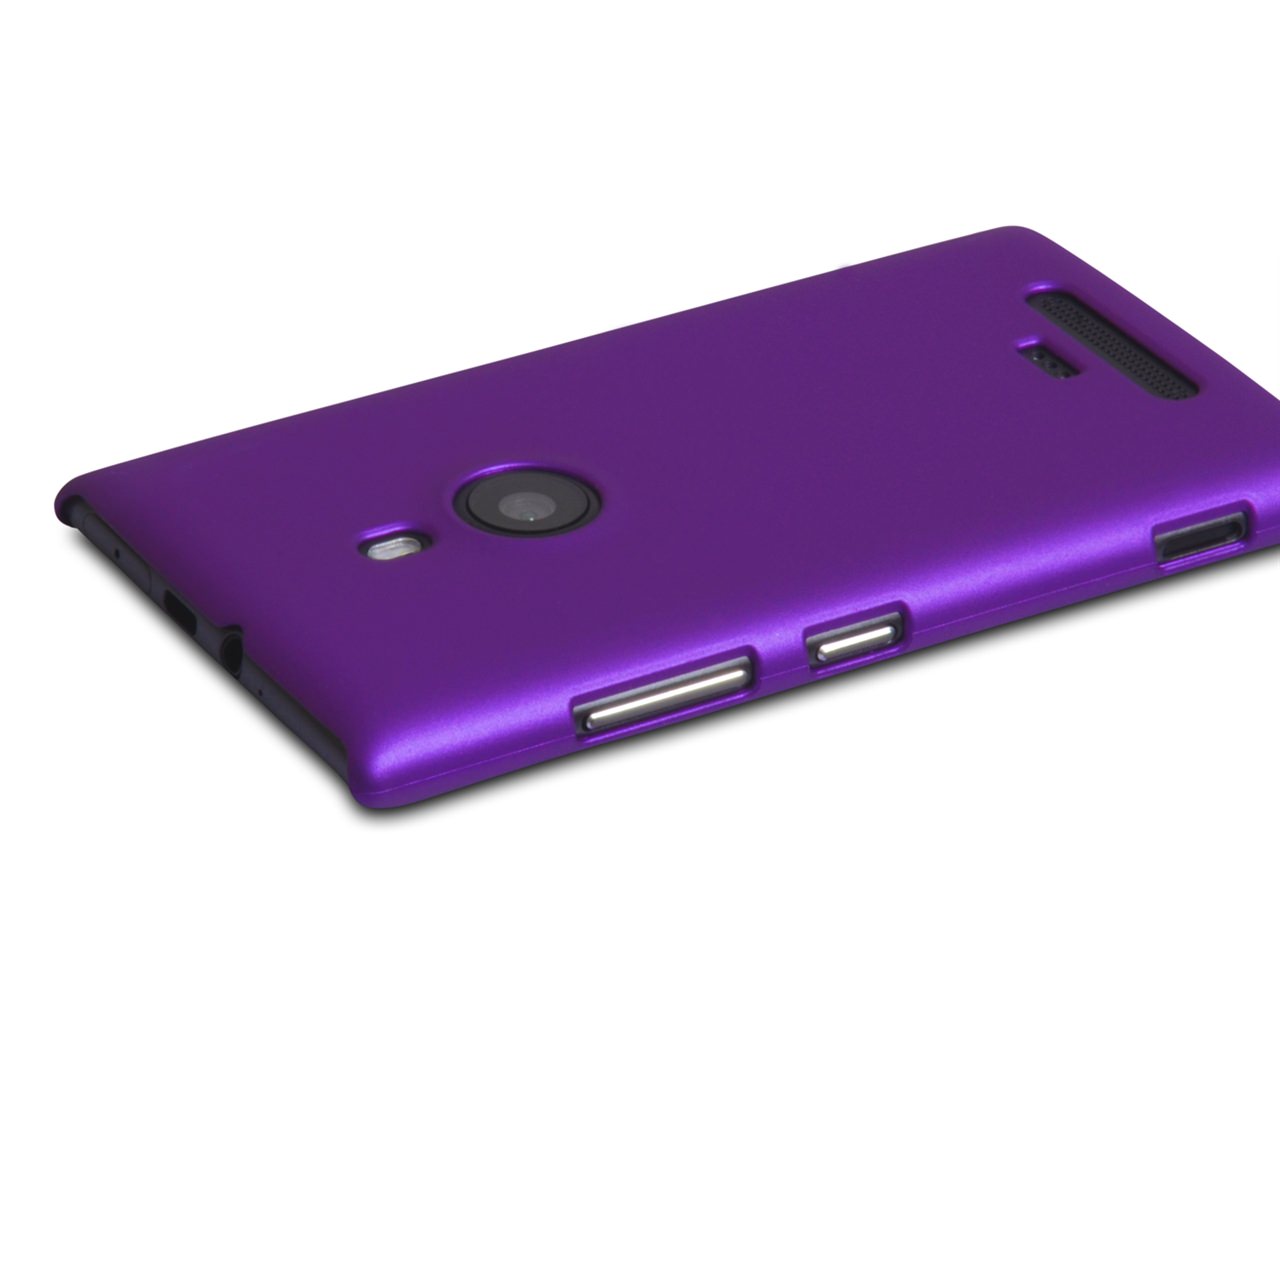 YouSave Accessories Nokia Lumia 925 Hard Hybrid Case - Purple